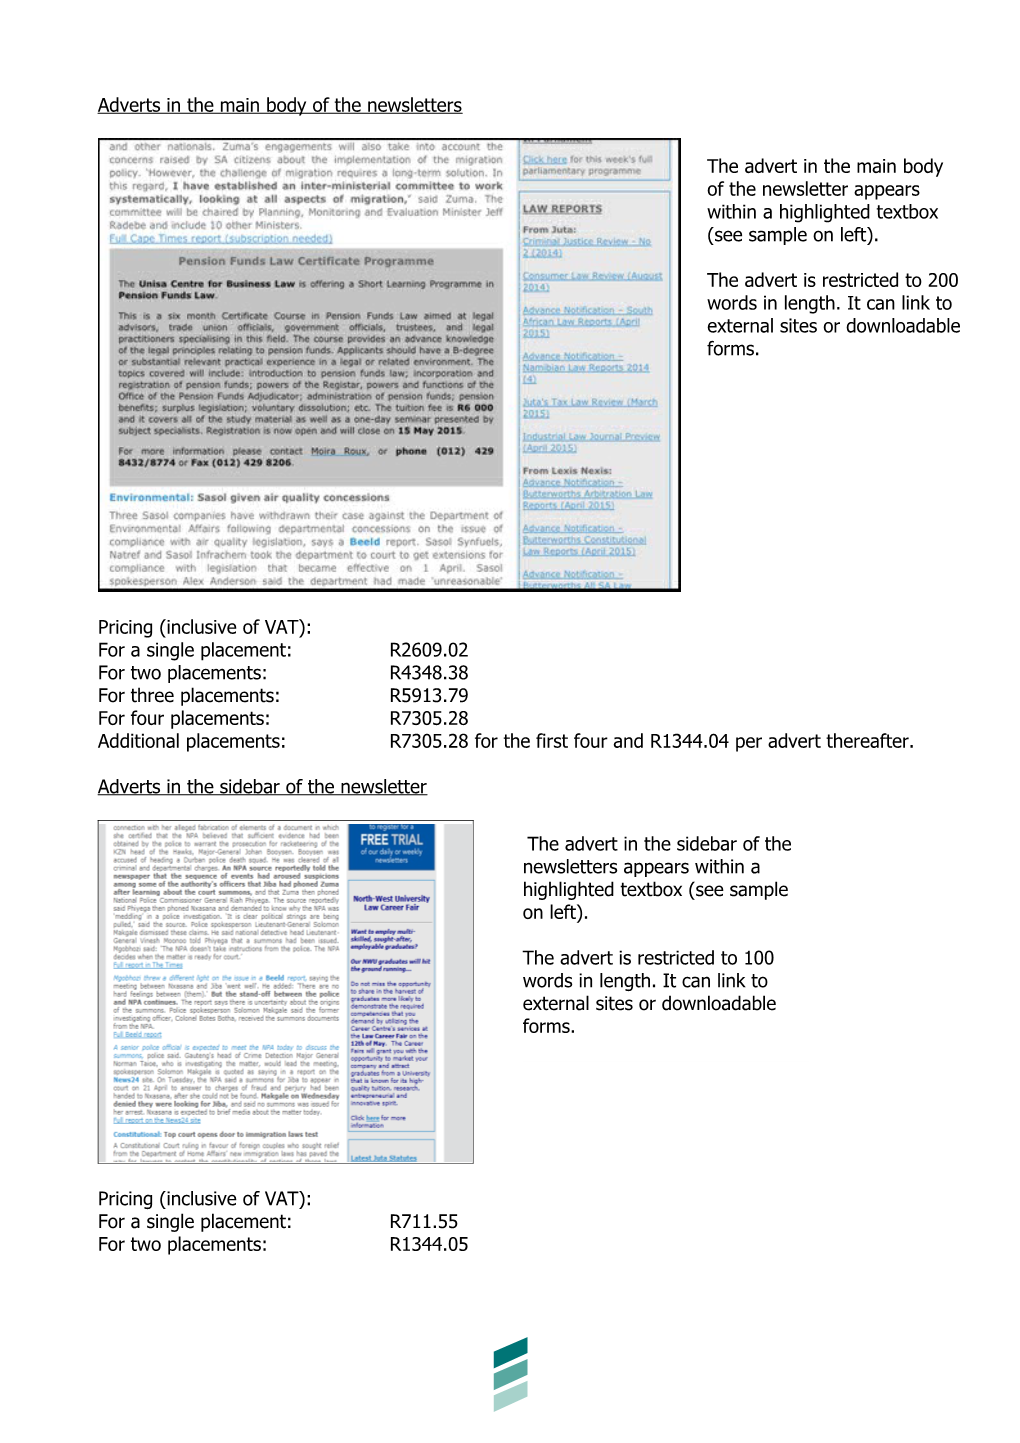 Information Sheet: Legalbrief Advertising Options